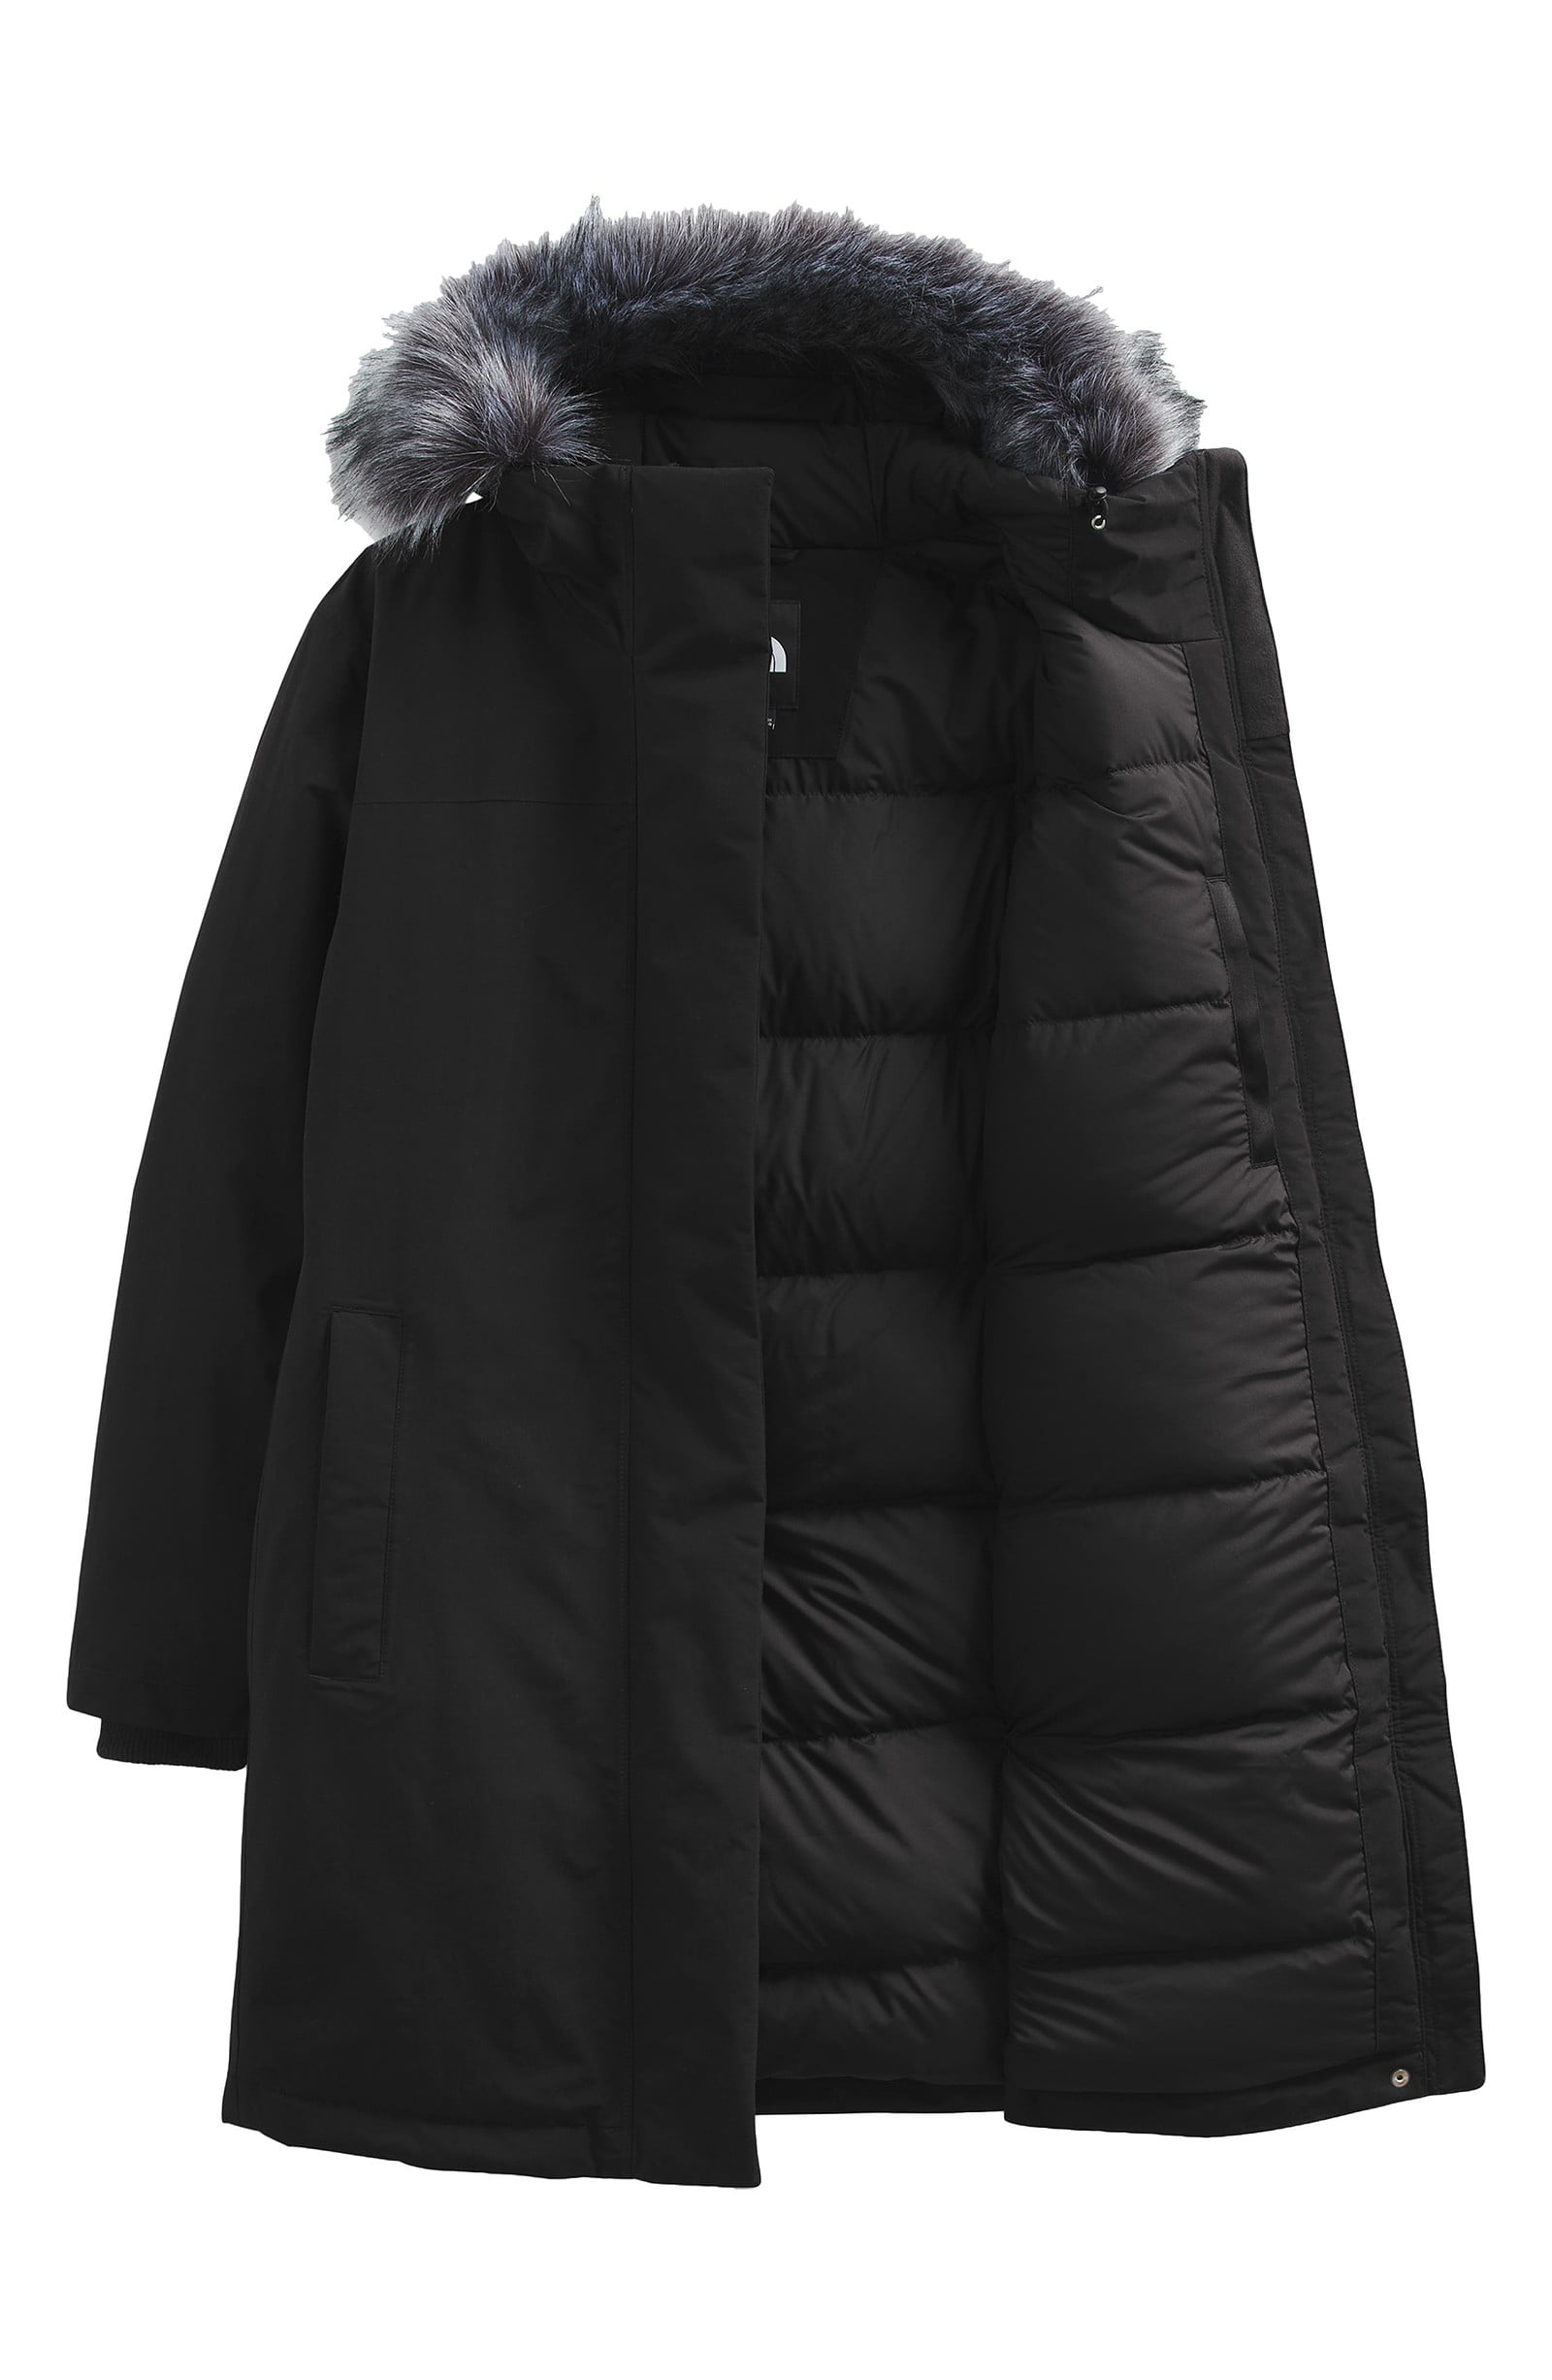 The North Face Osito Parka  Coats for women, Black friday walmart